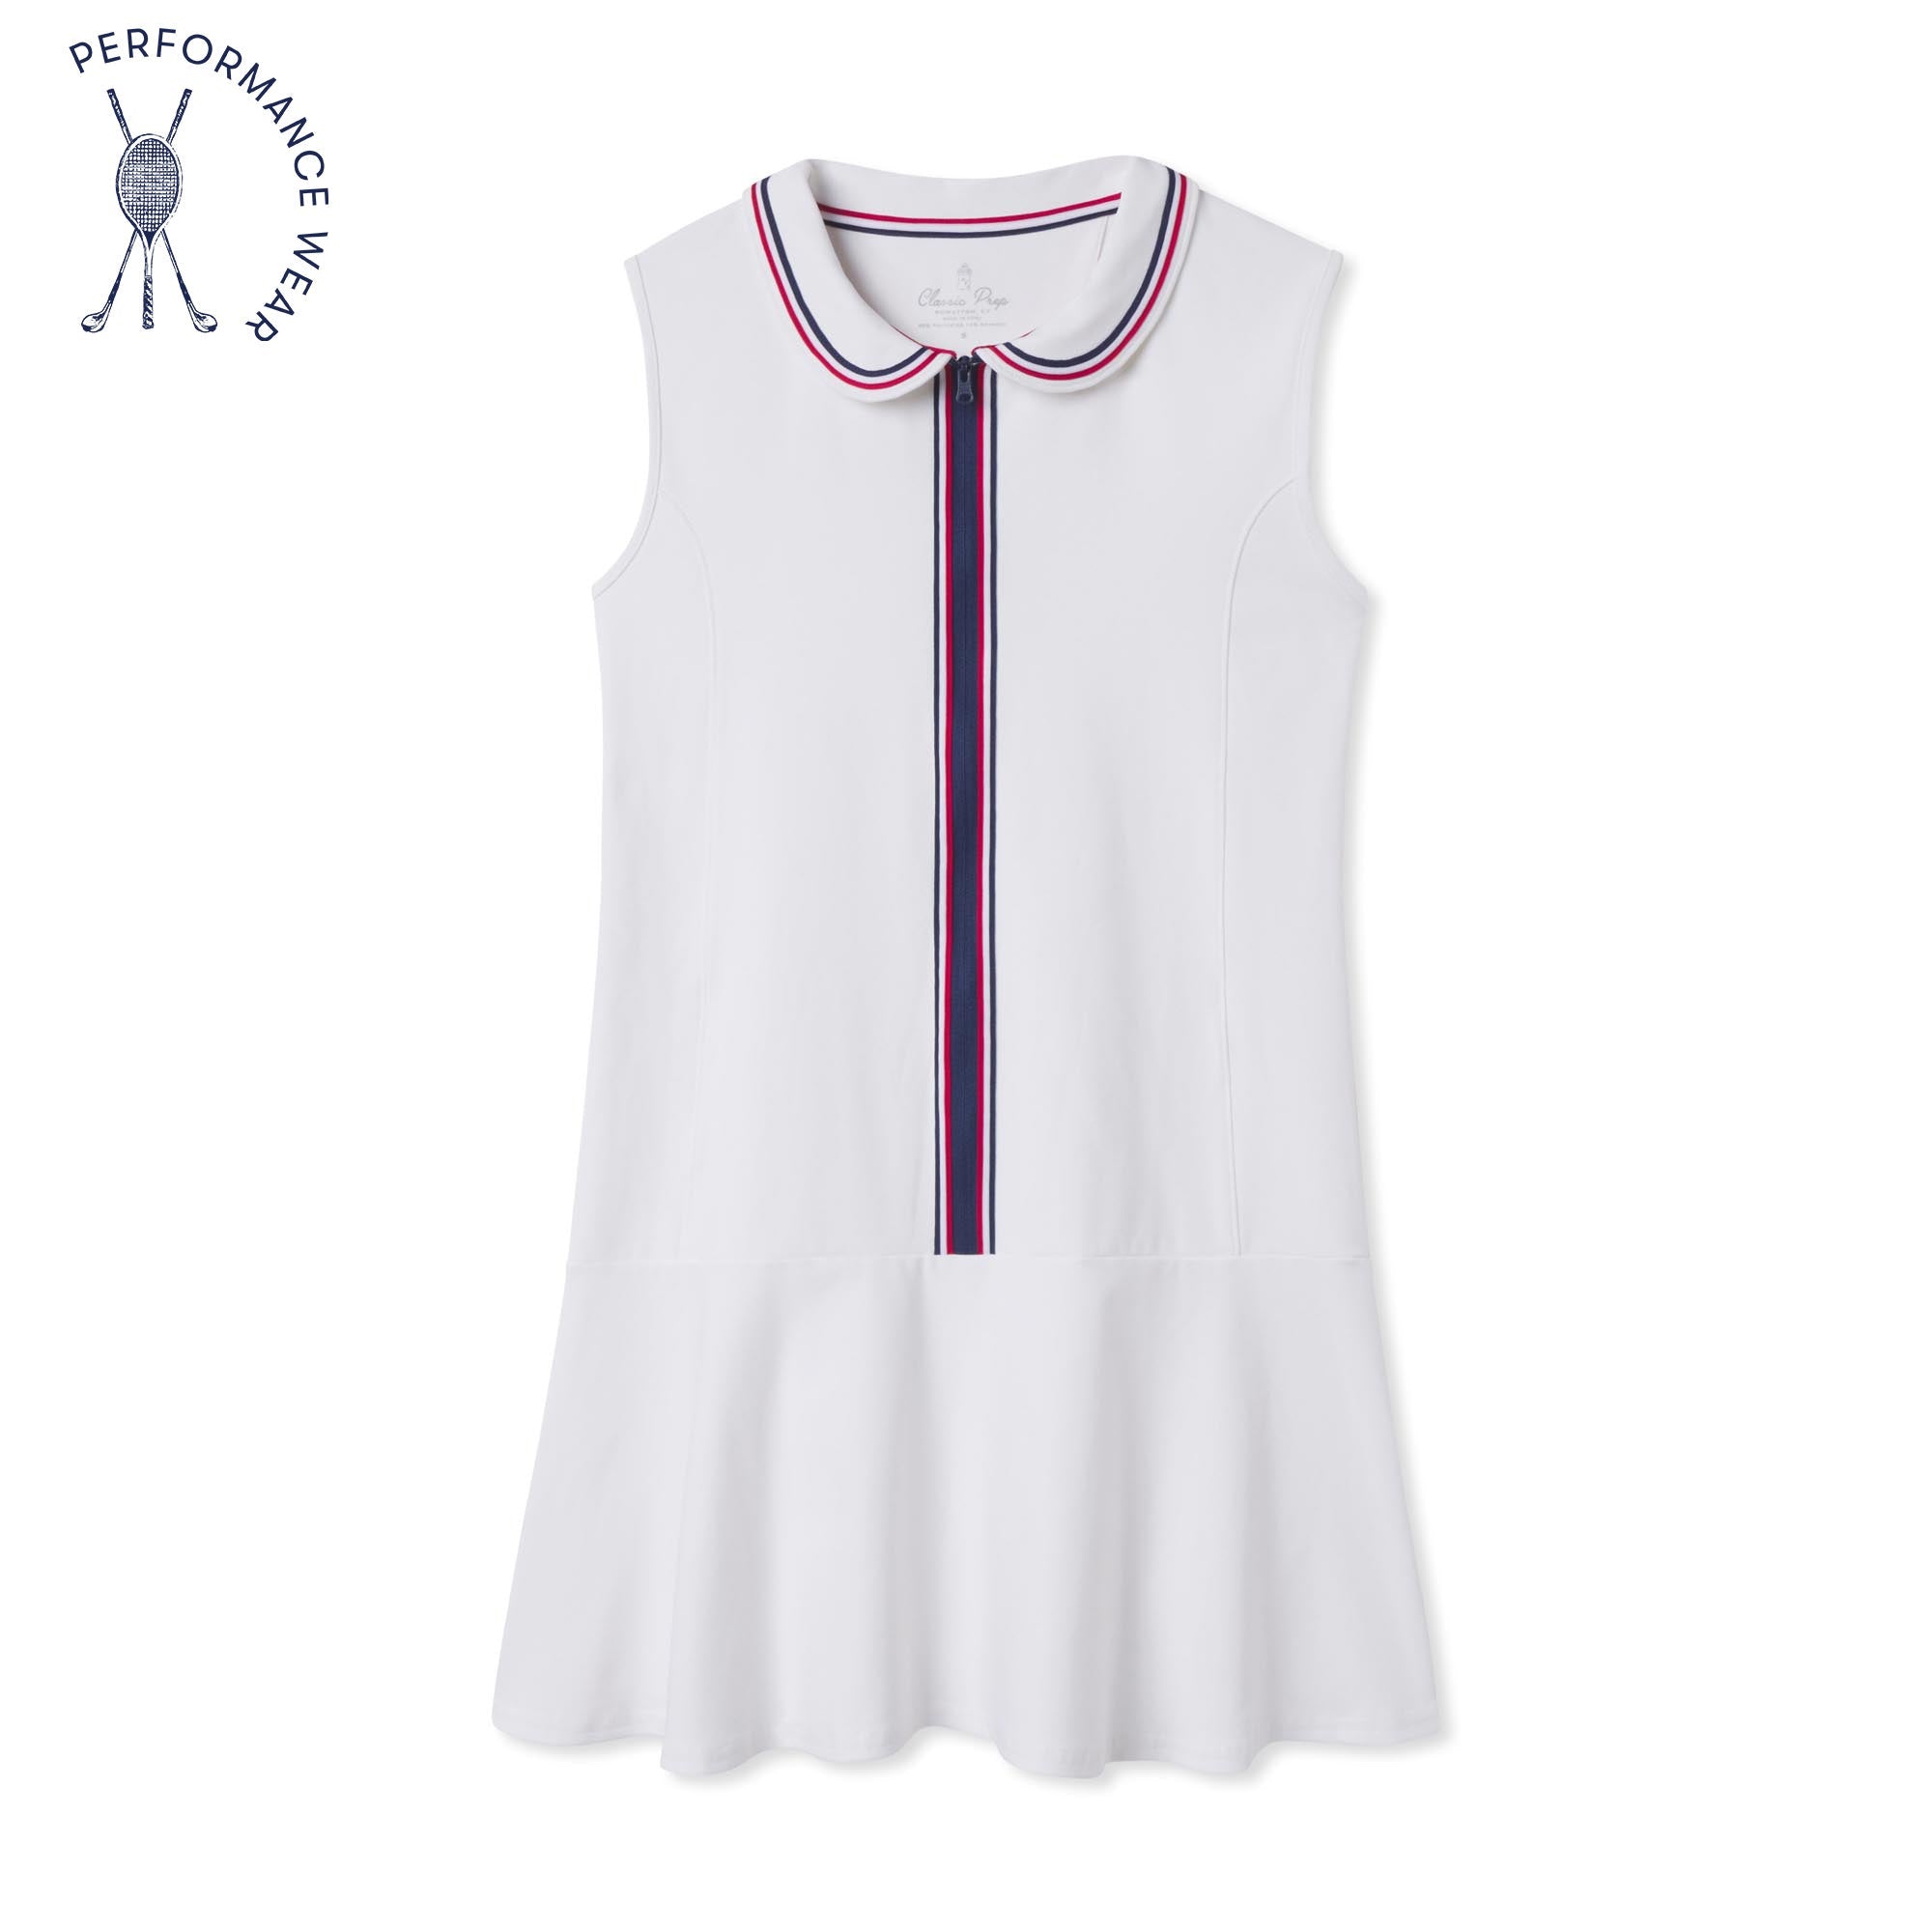 Classic and Preppy Women's Vivian Tennis Performance Americana Dress, Bright White-Dresses, Jumpsuits and Rompers-Bright White-Womens XS (0-2)-CPC - Classic Prep Childrenswear